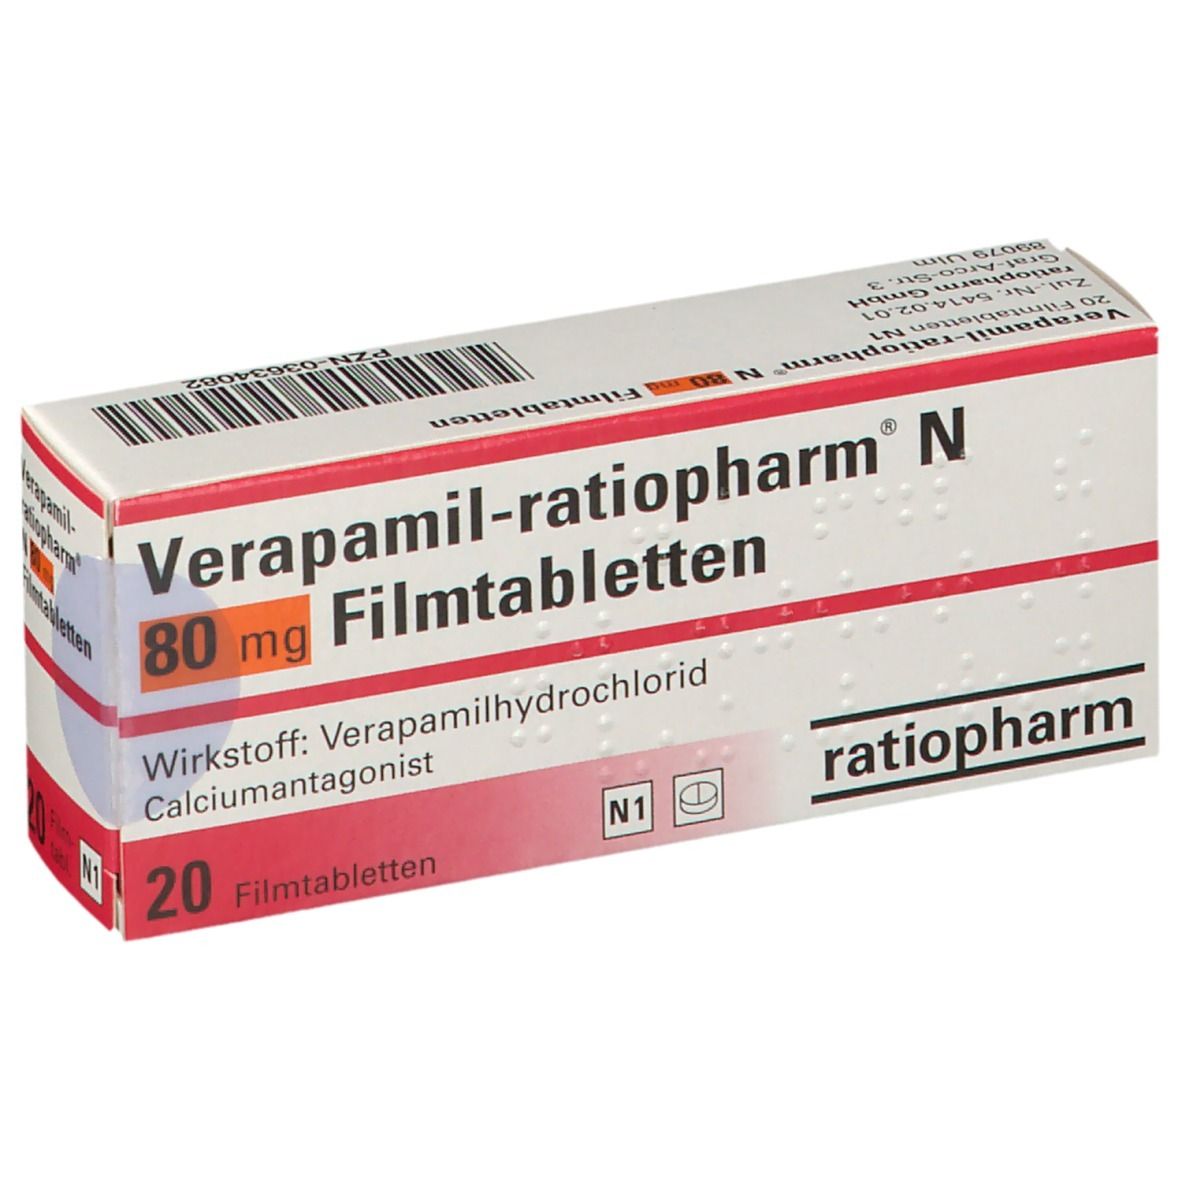 Verapamil-ratiopharm® N 80 mg